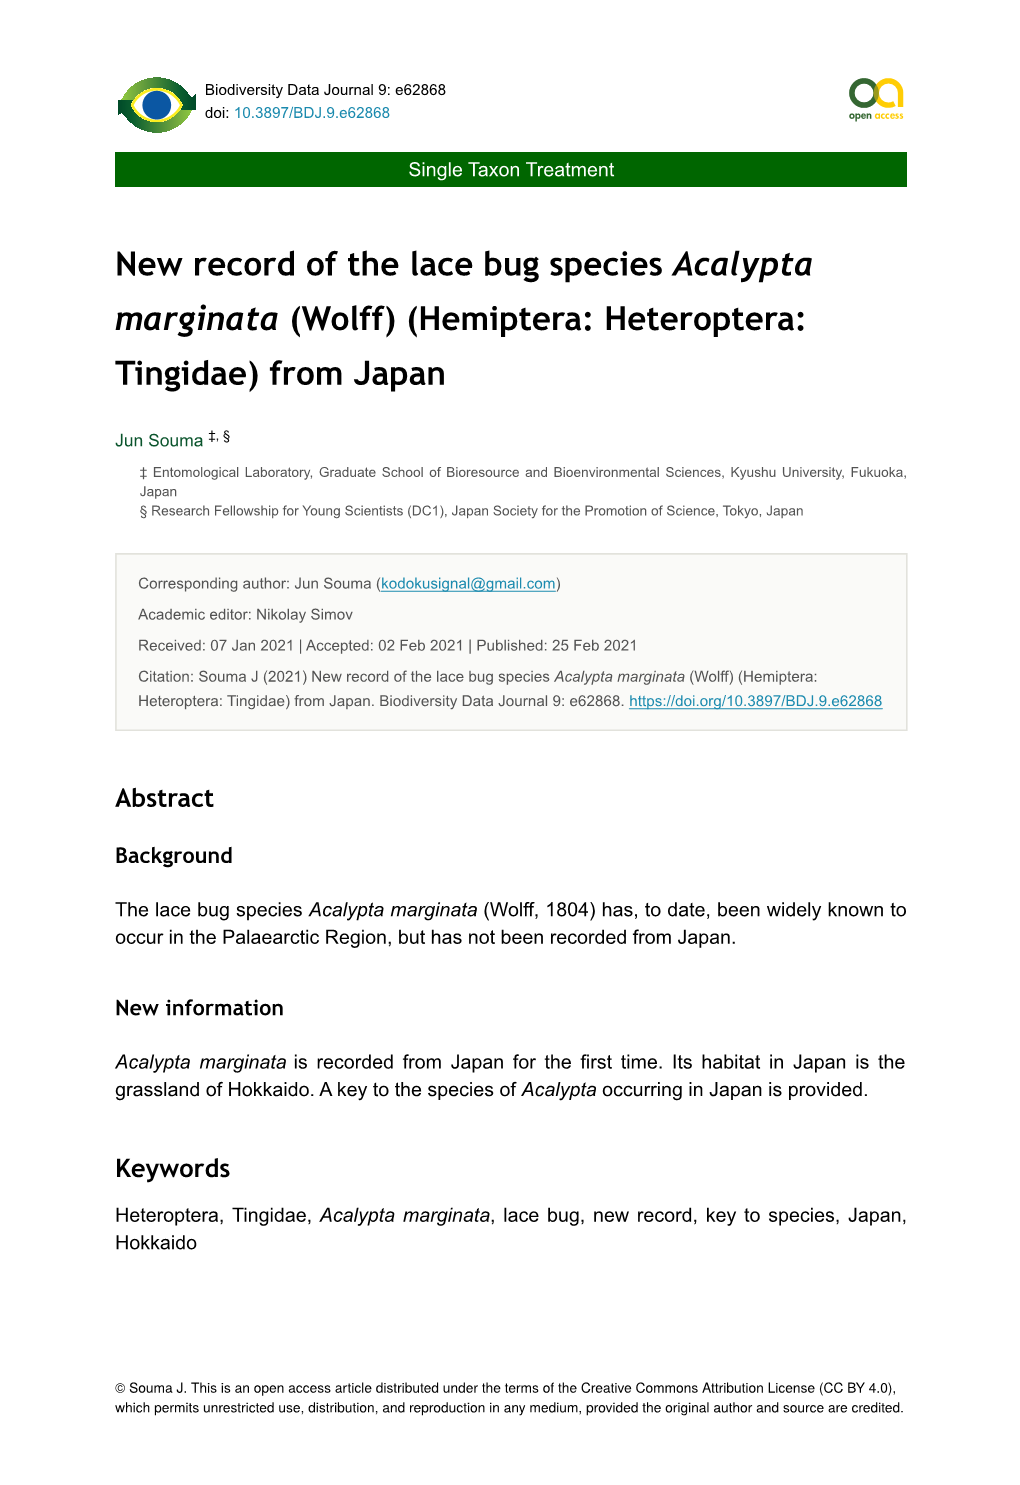 New Record of the Lace Bug Species Acalypta Marginata (Wolff) (Hemiptera: Heteroptera: Tingidae) from Japan